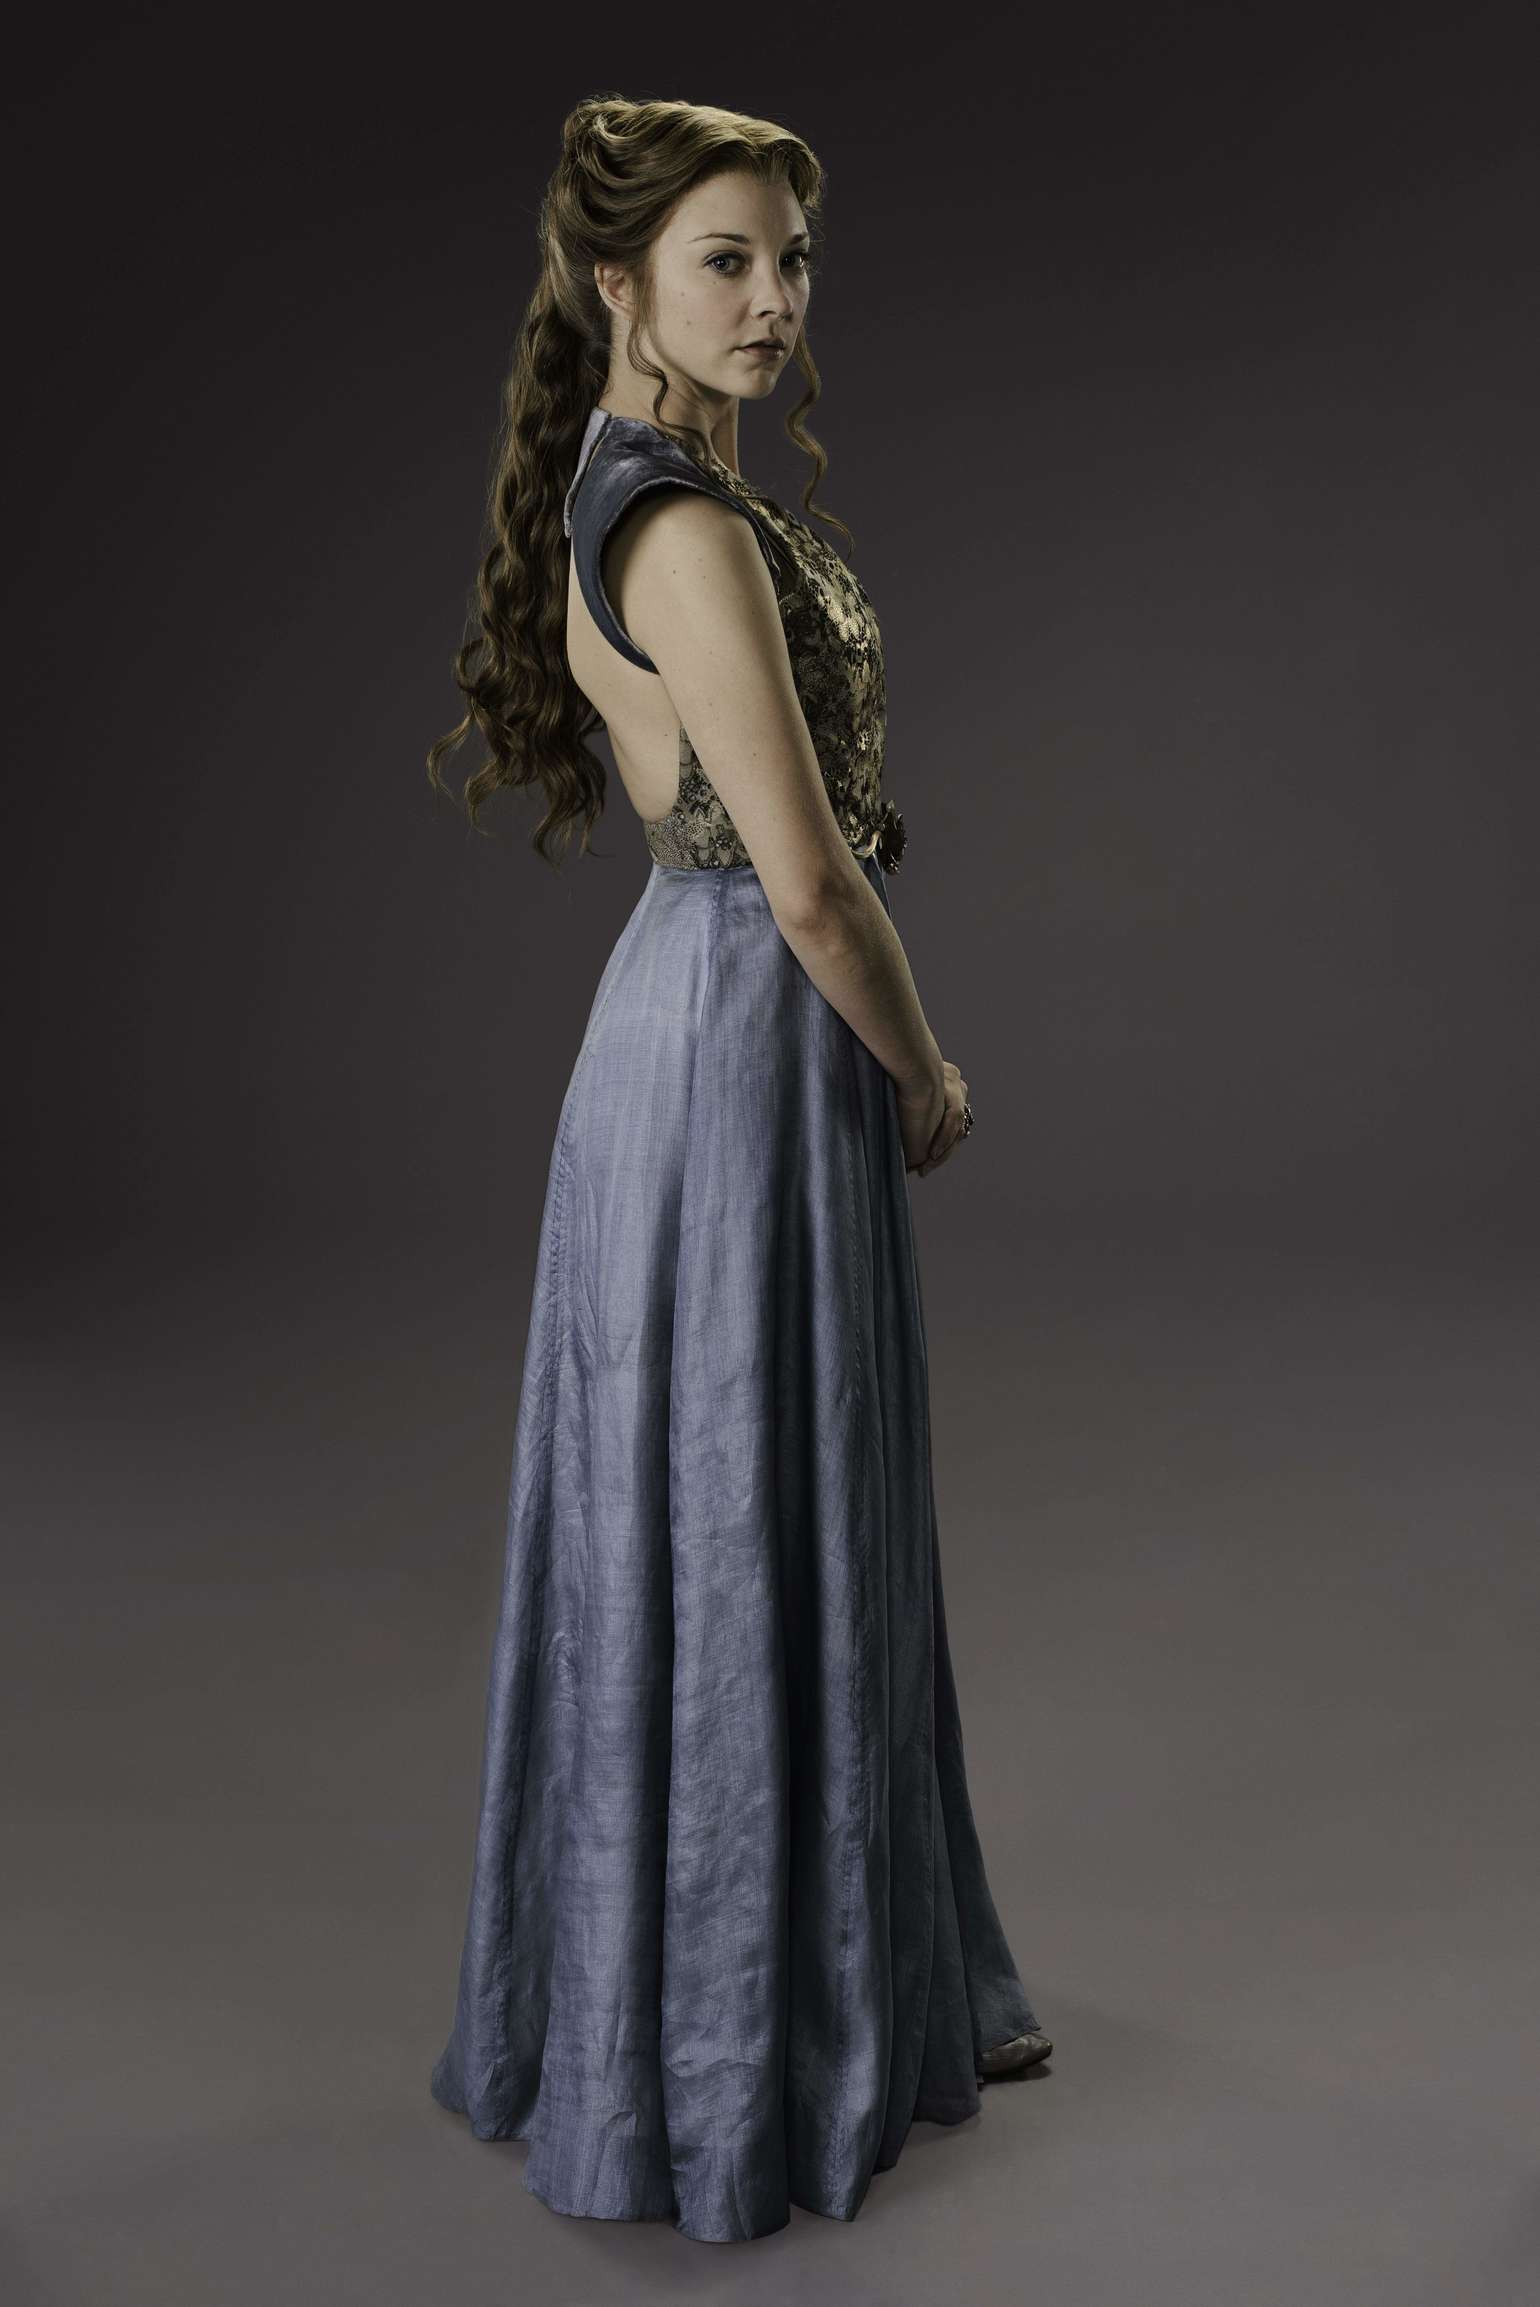 Natalie-Dormer---Game-of-Thrones-Season-4-Portraits--03.jpg